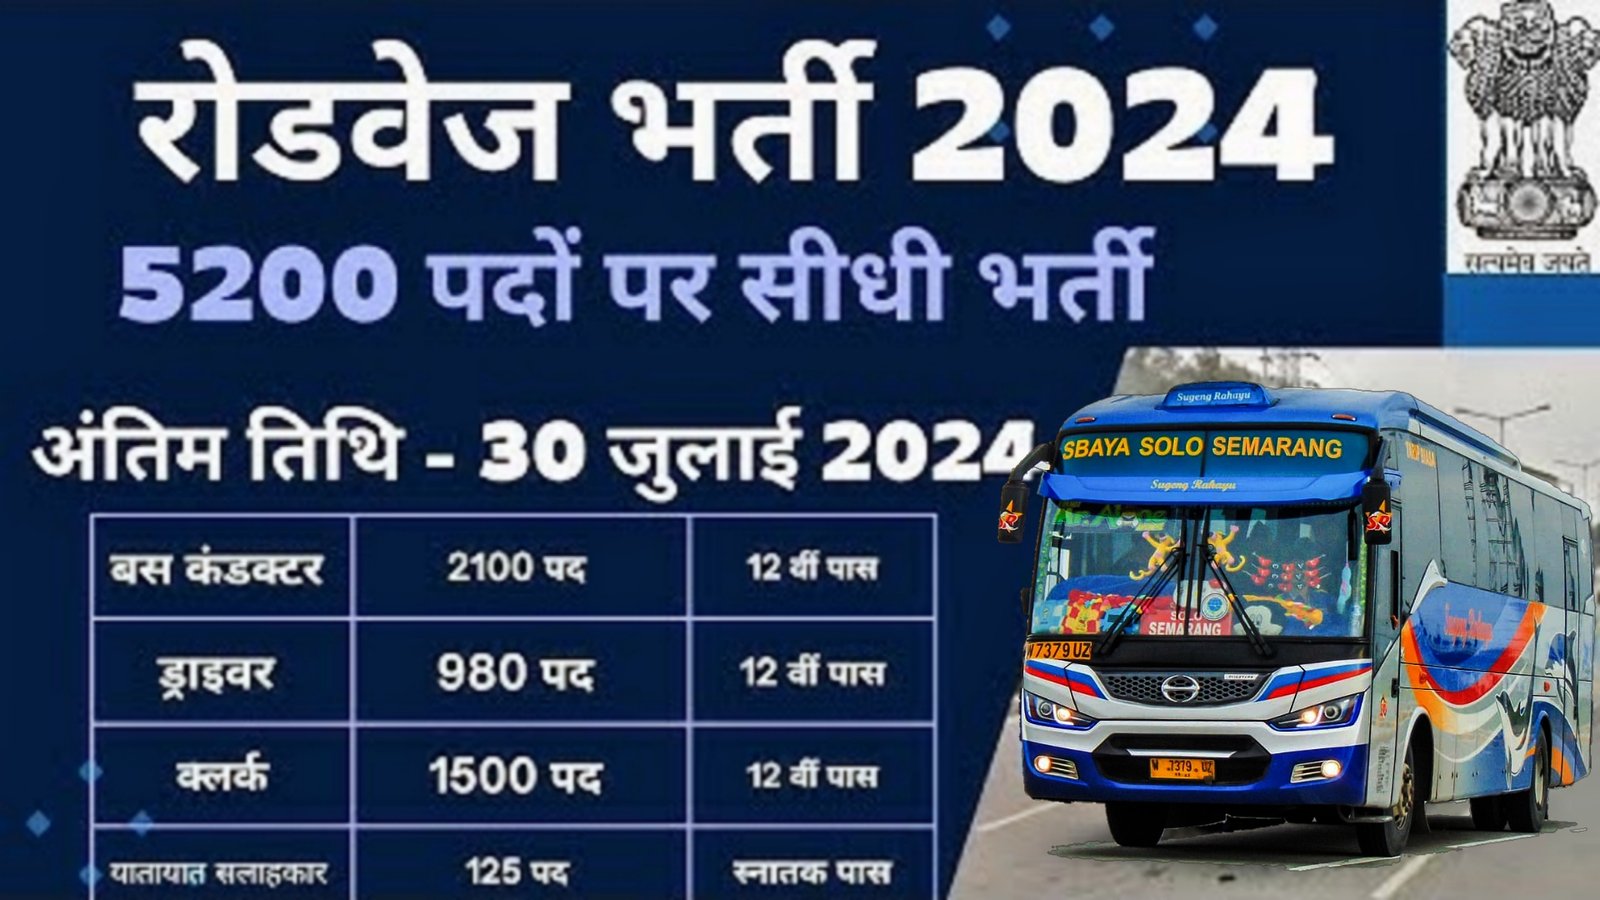 Rajasthan Roadways Bharti 2024